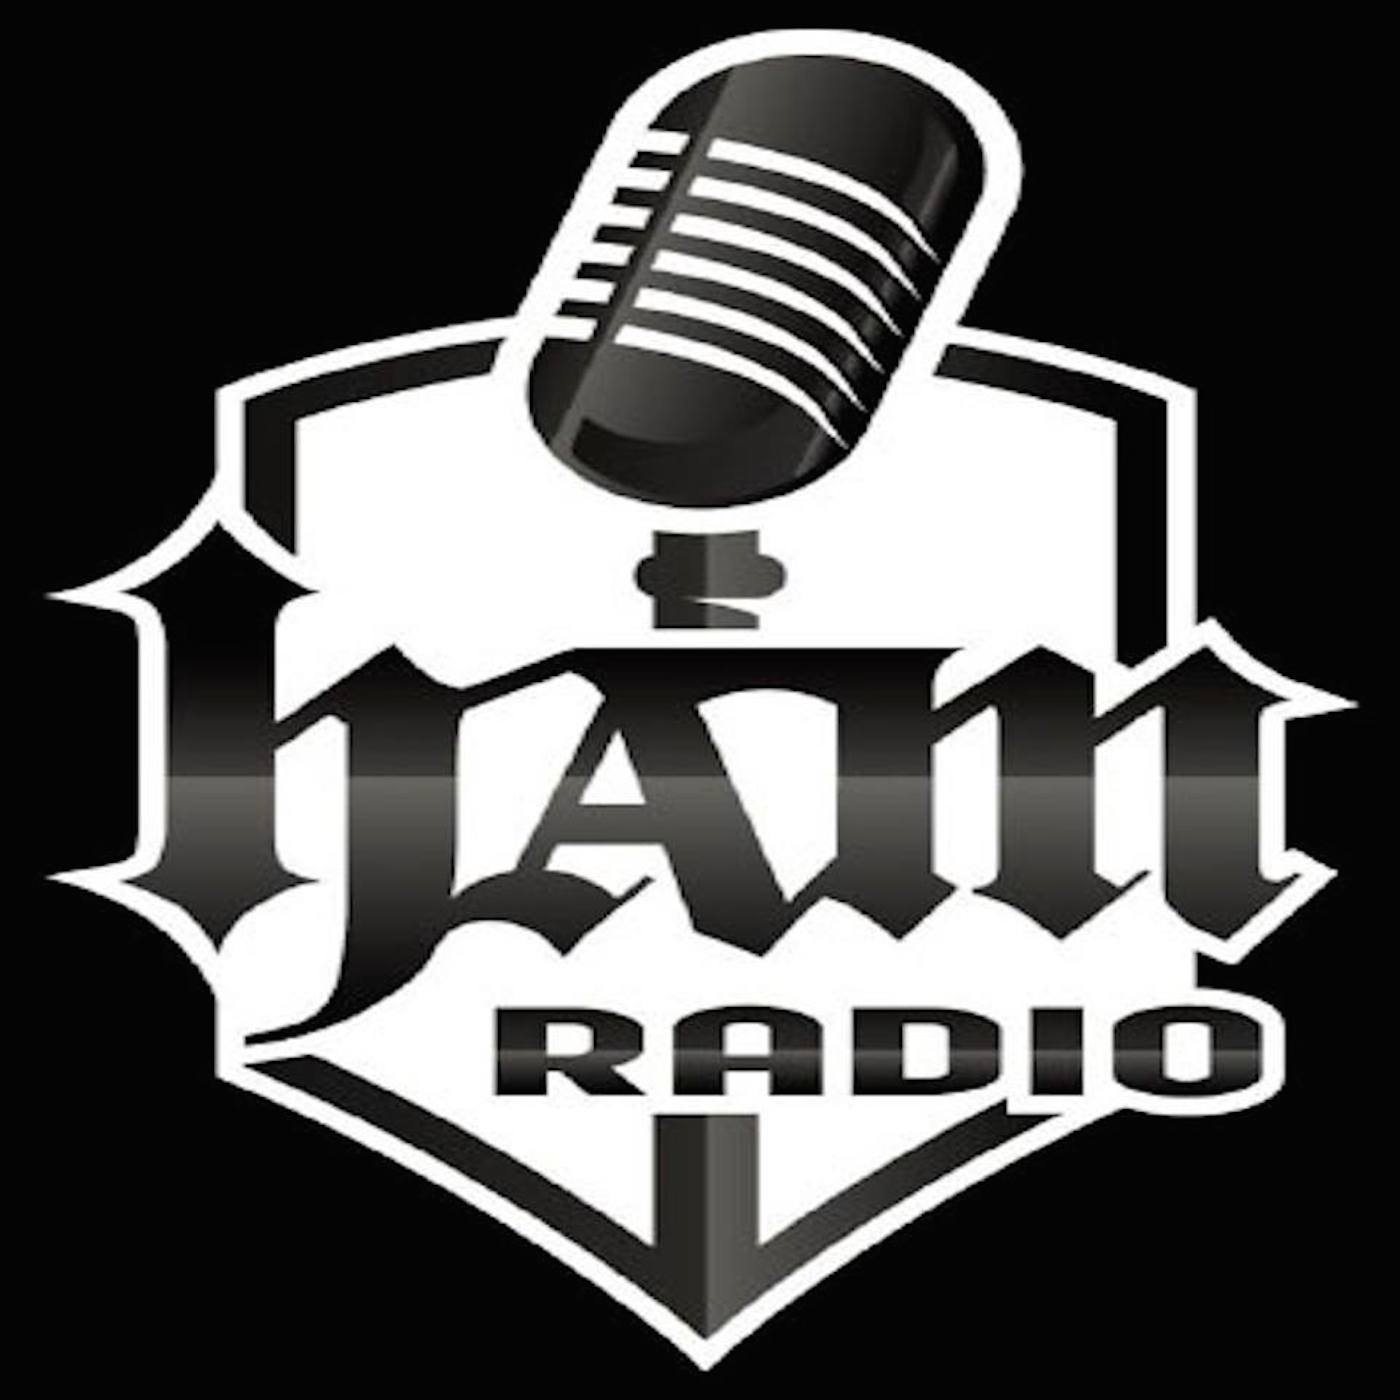 The Ham Radio Show